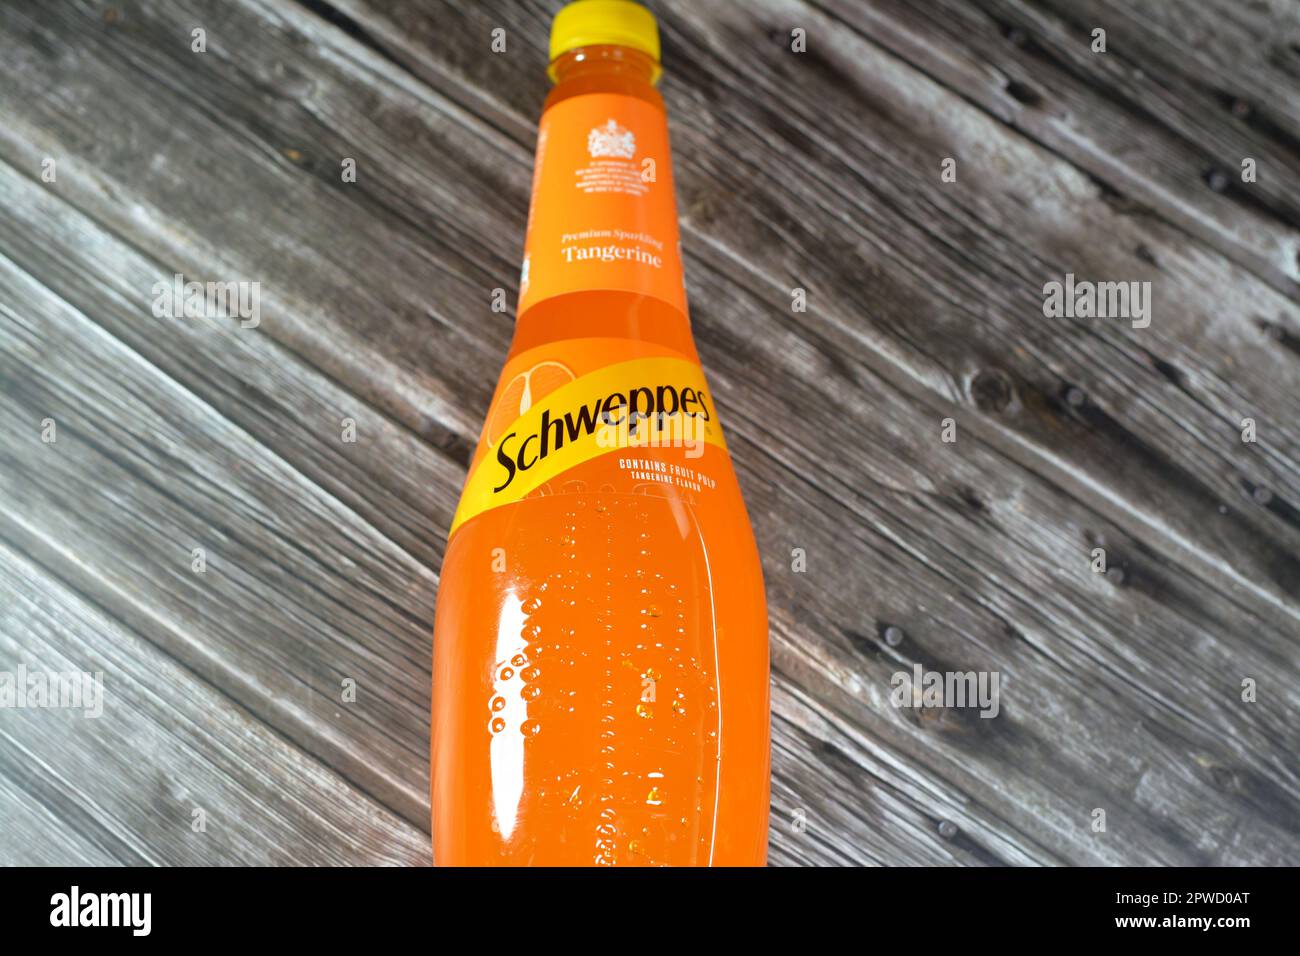 Cairo, Egypt, April 28 2023: Schweppes premium sparkling soft drink contains fruit pulp tangerine flavor, Schweppes is a beverage brand that originate Stock Photo